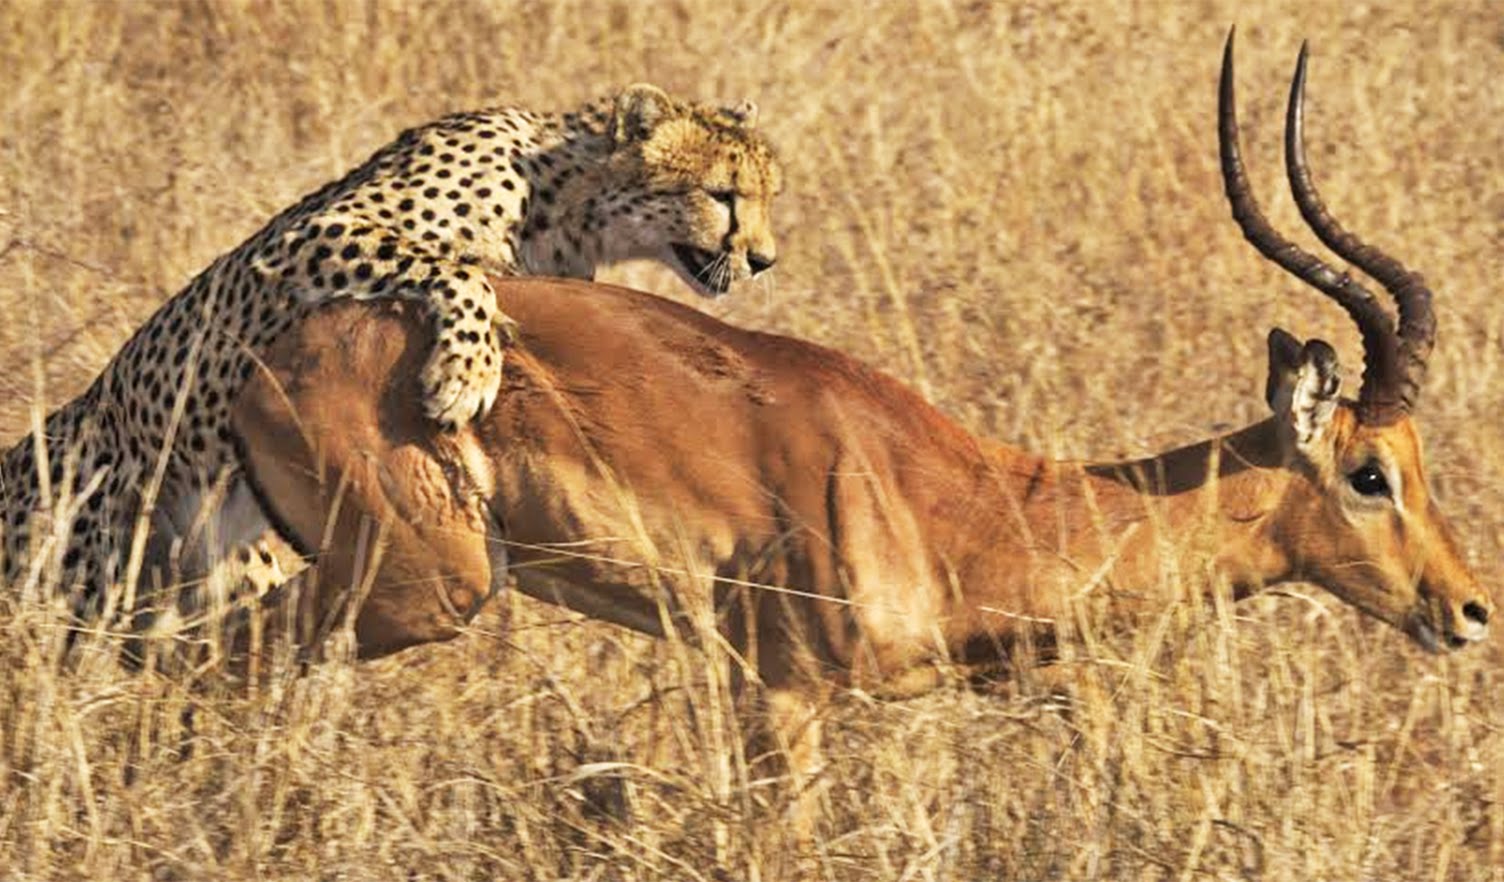 http://africageographic.com/wp-content/uploads/2015/10/cheetah4.jpg